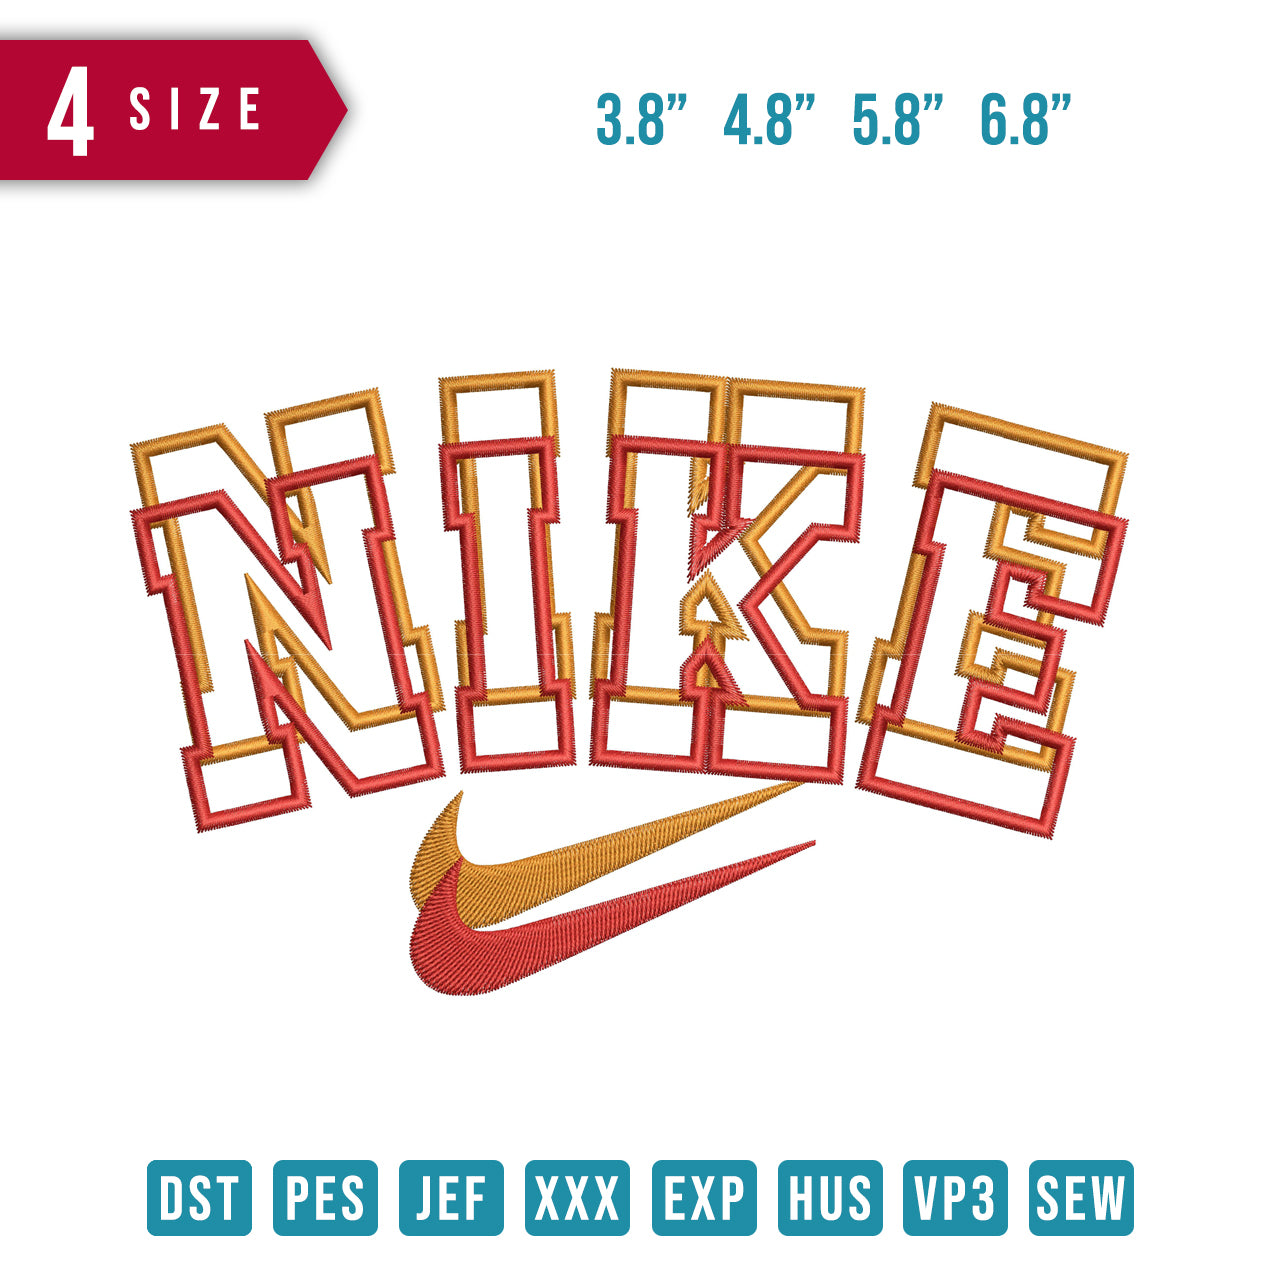 Nike Overlapp 2 color